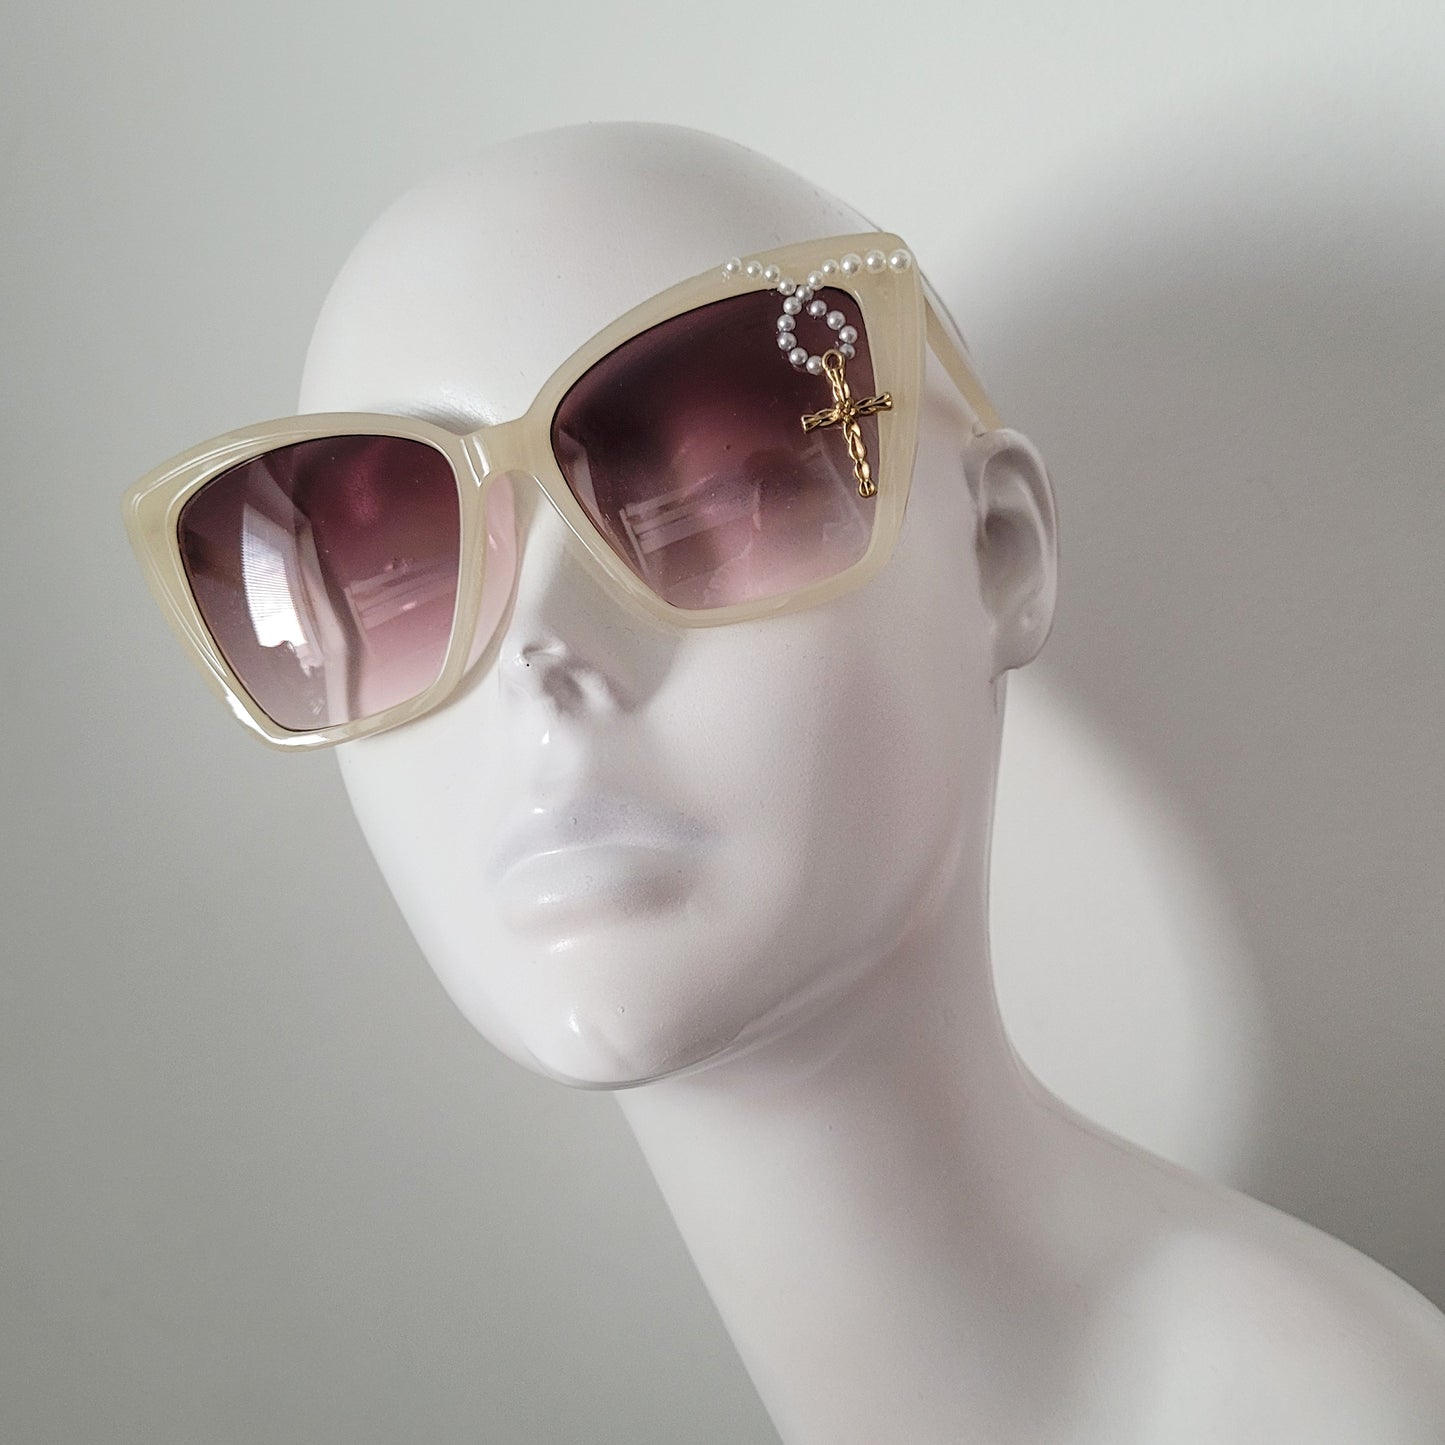 Sacrilegious Collection: The Purified Sacrilege sunglasses